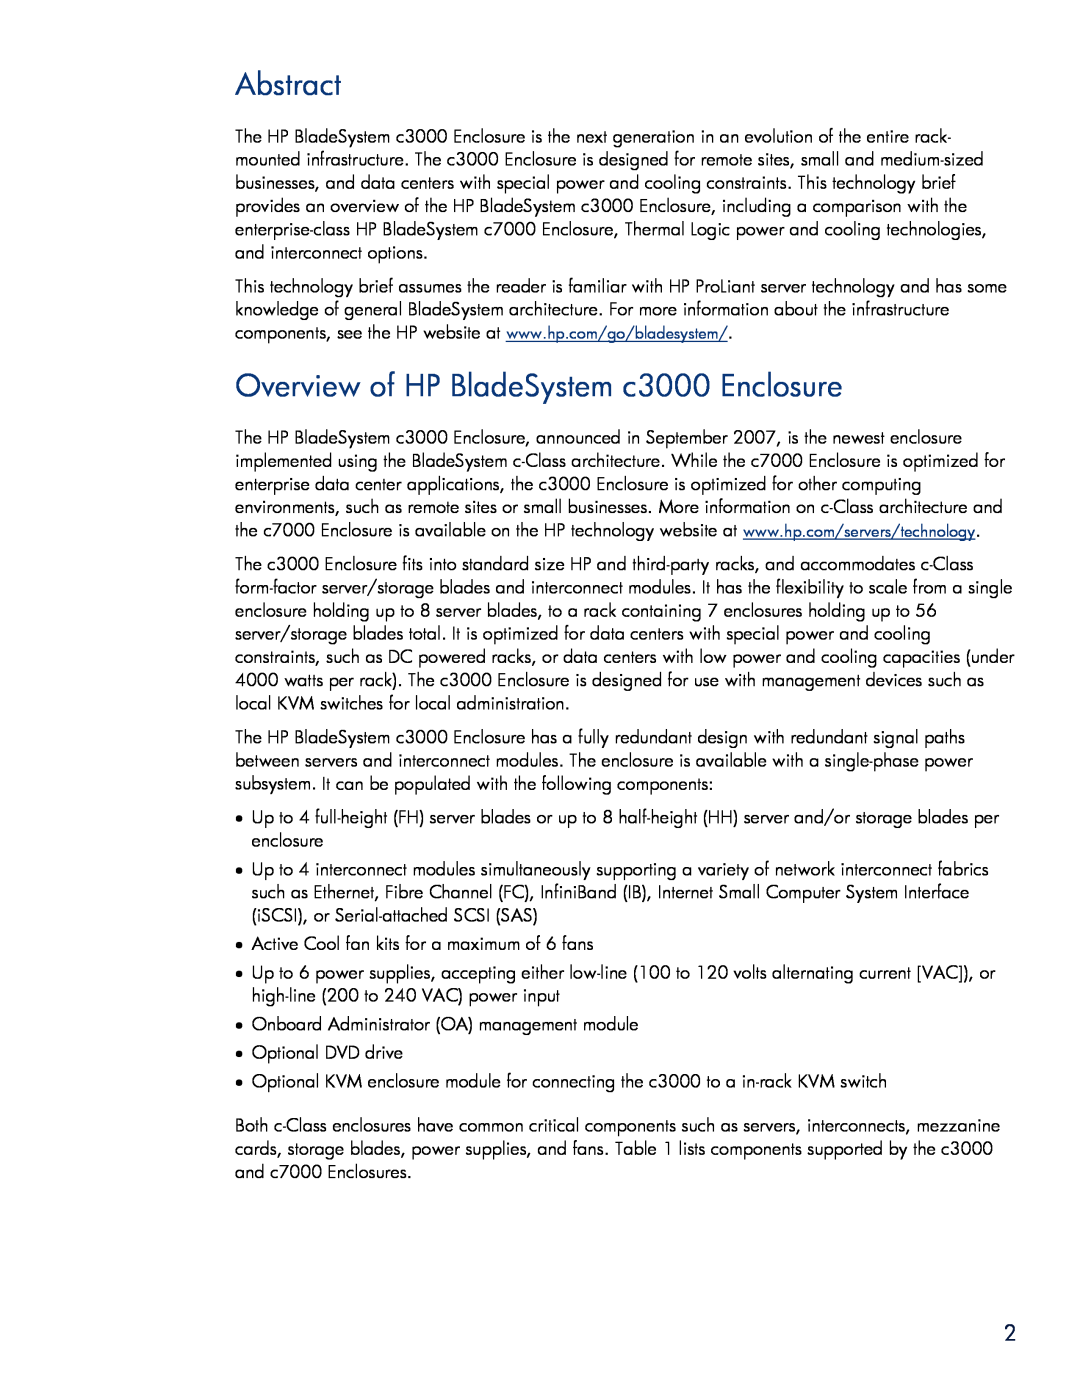 HP BladeSystem Enclosure technologies manual Abstract, Overview of HP BladeSystem c3000 Enclosure 